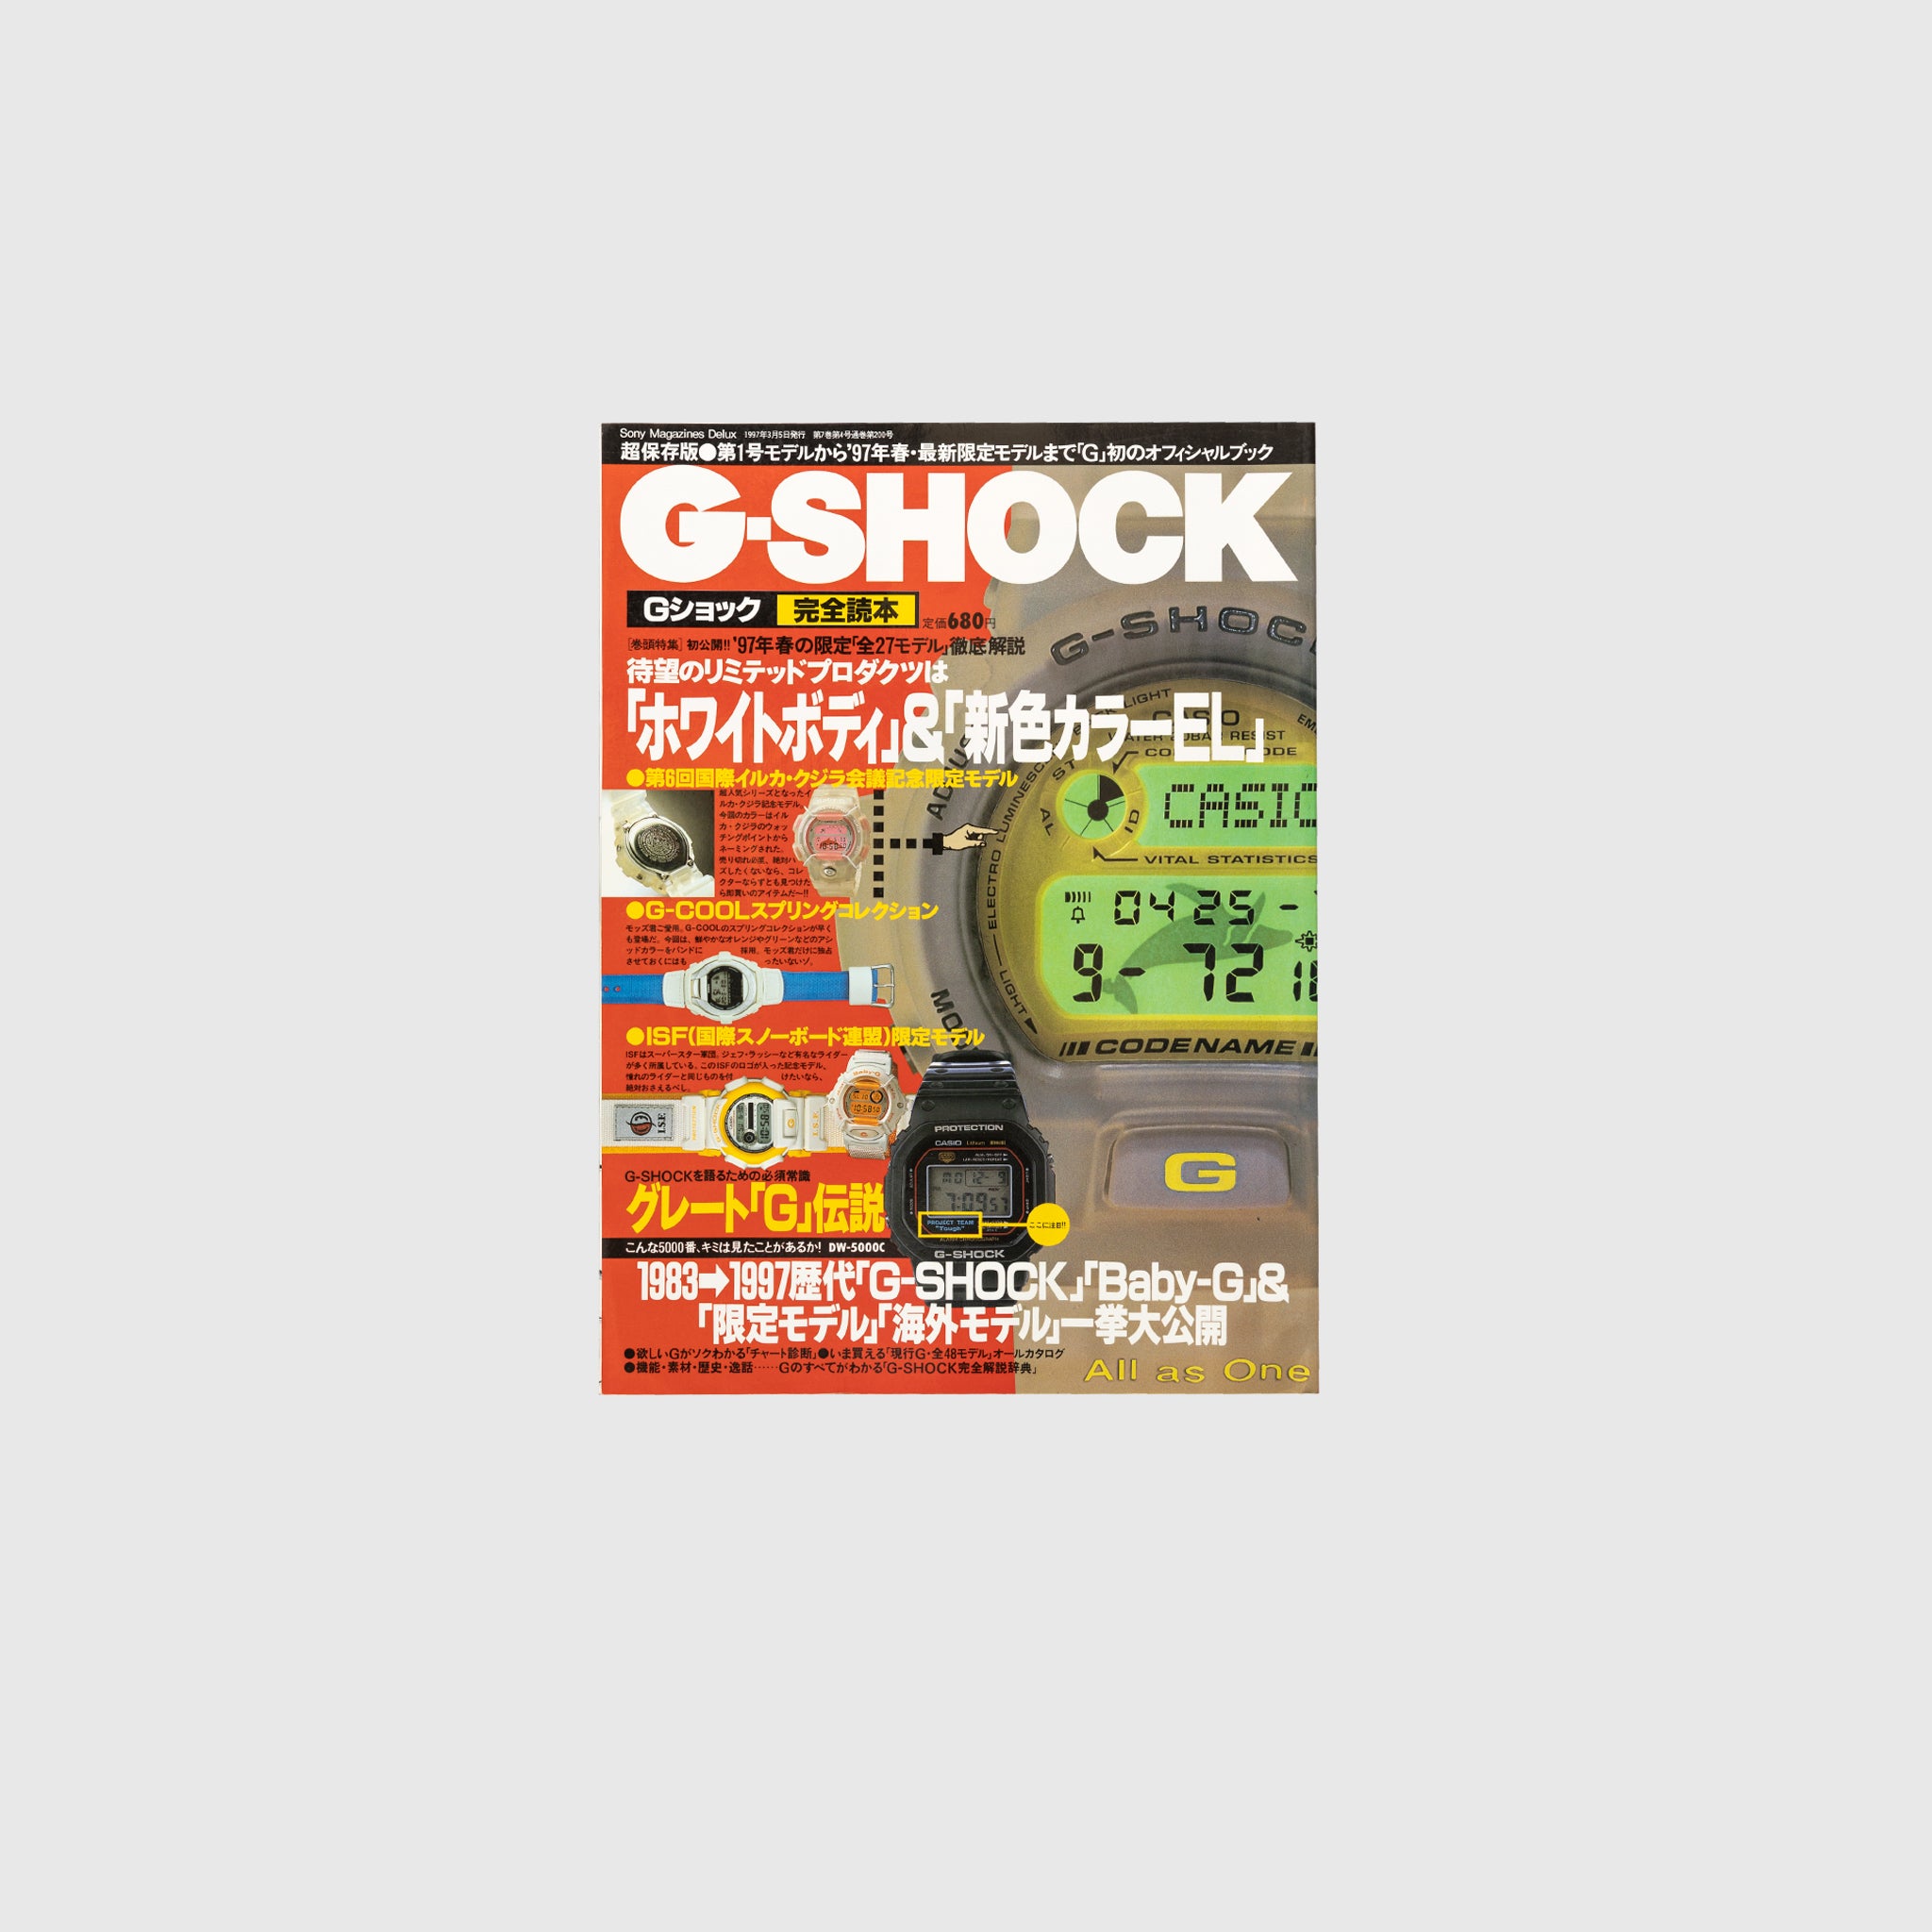 G-SHOCK/ BABY G MAGAZINE